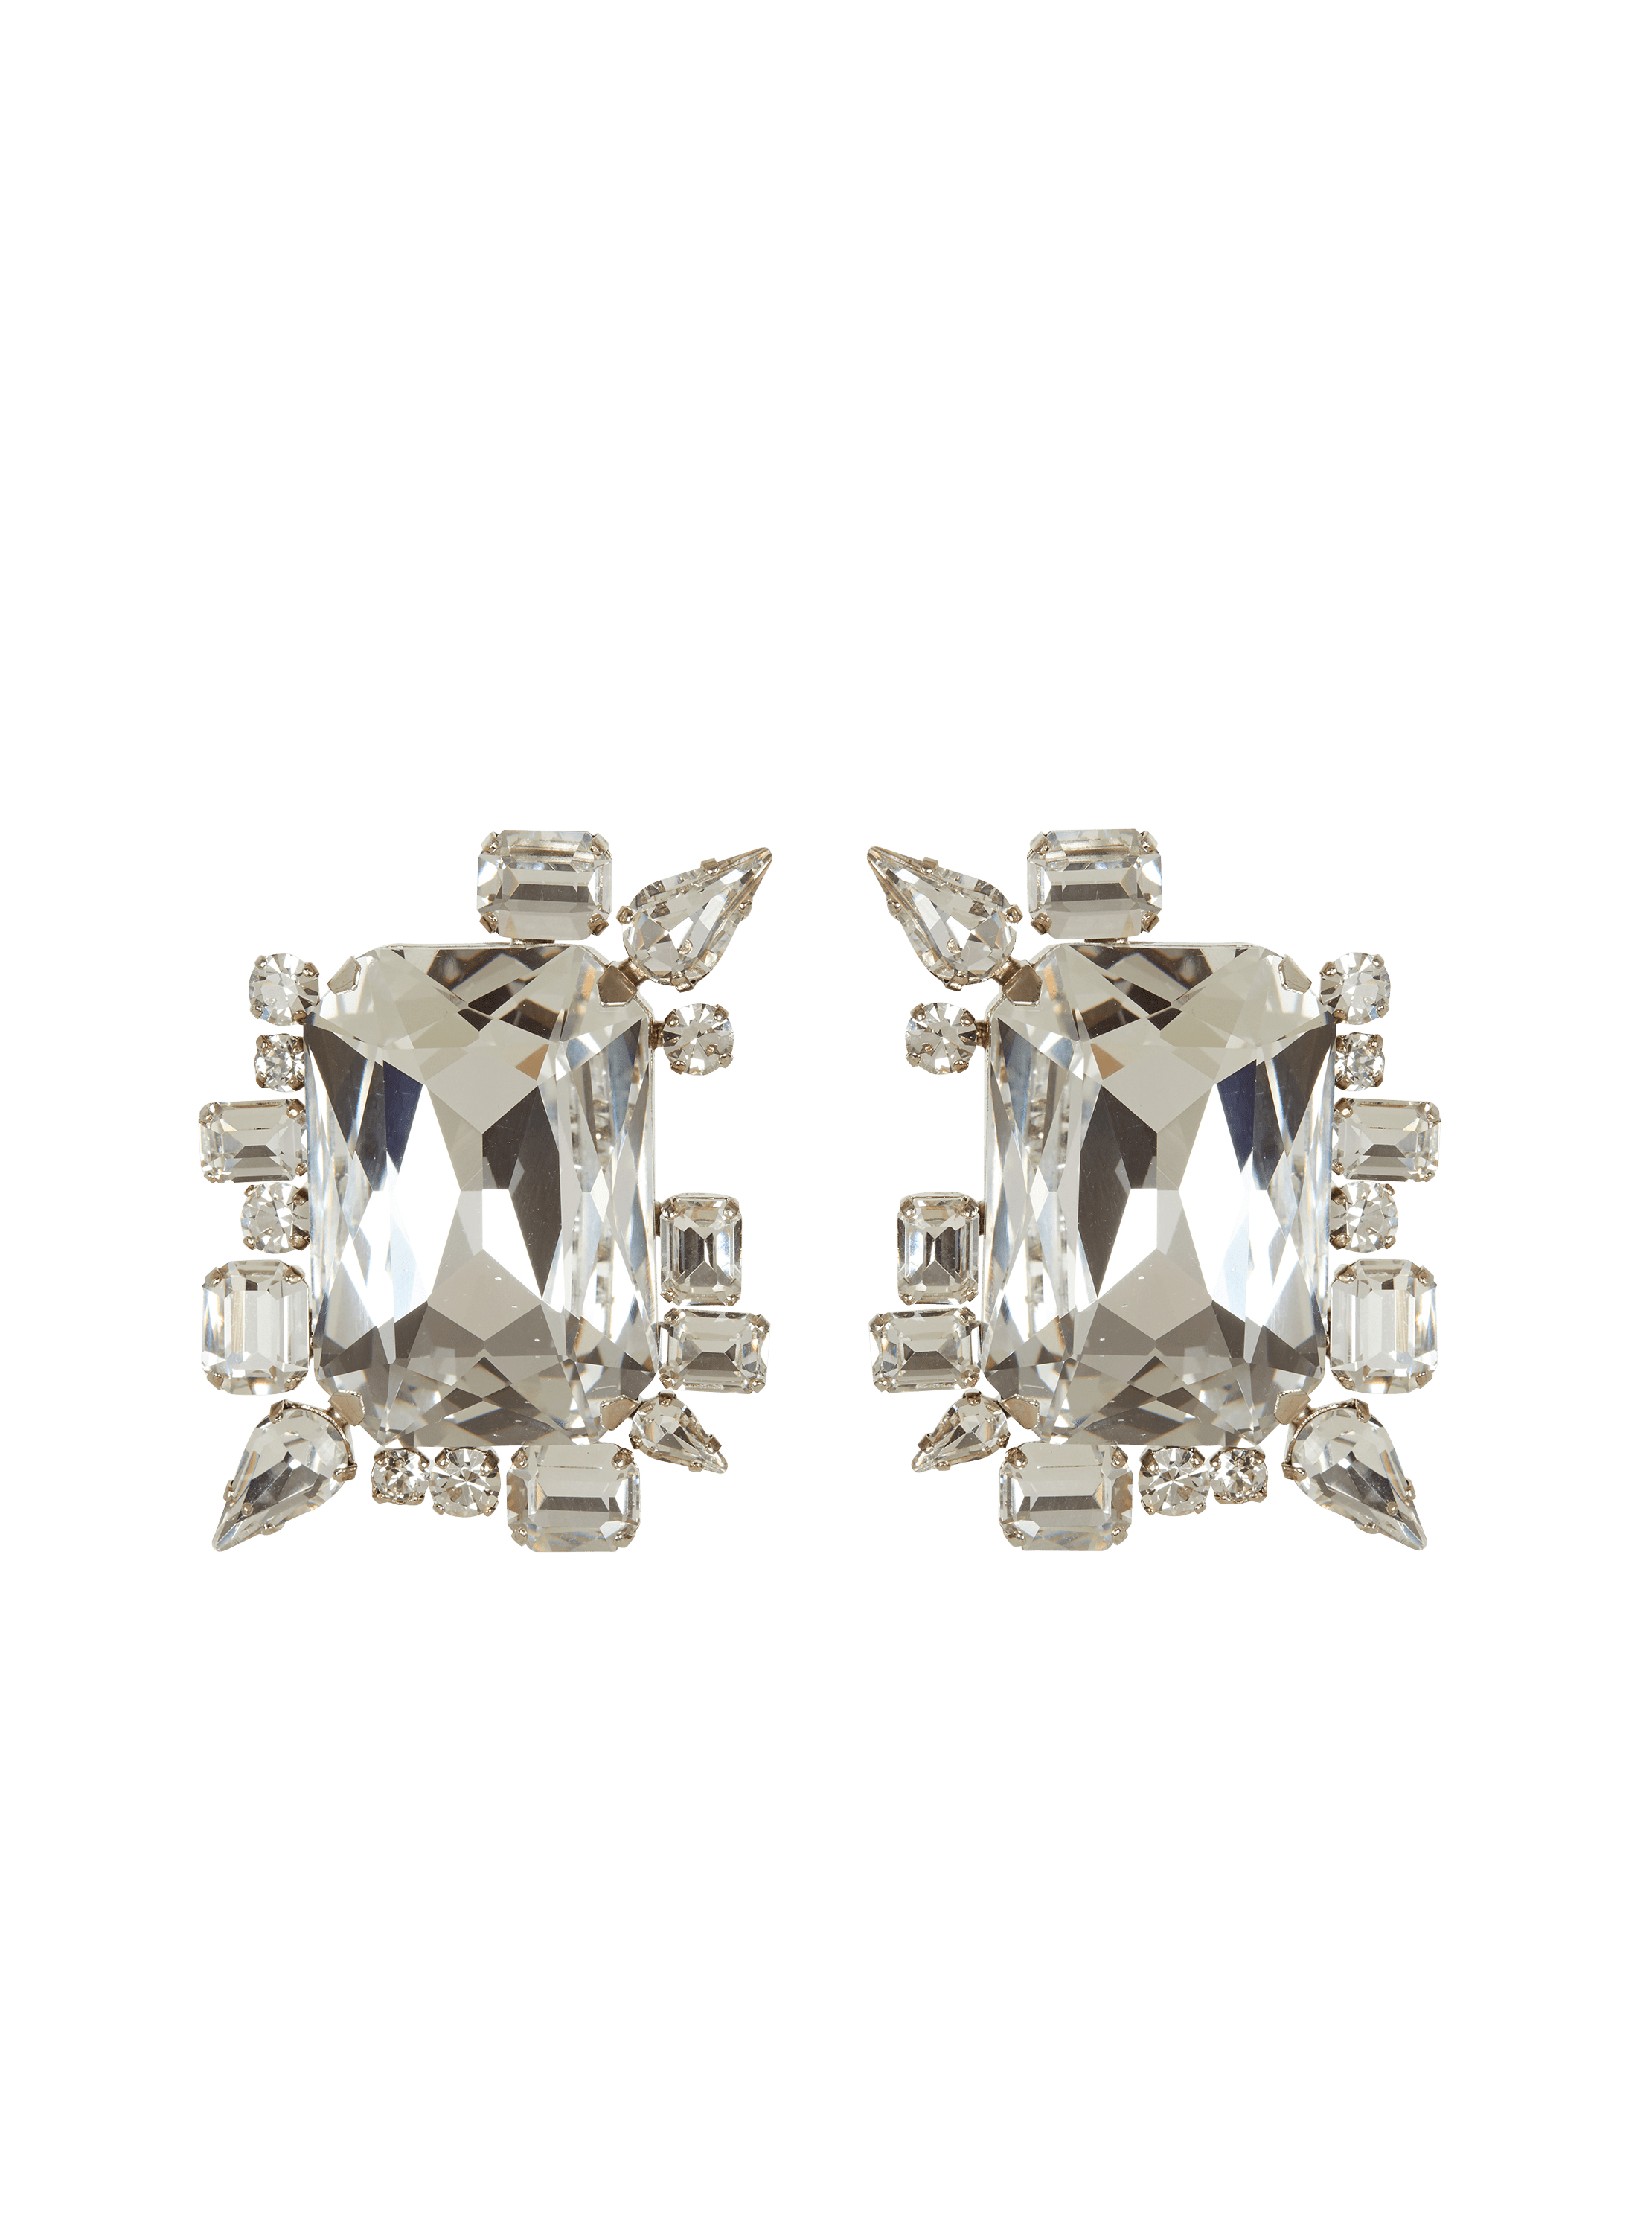 Large paved crystal earrings